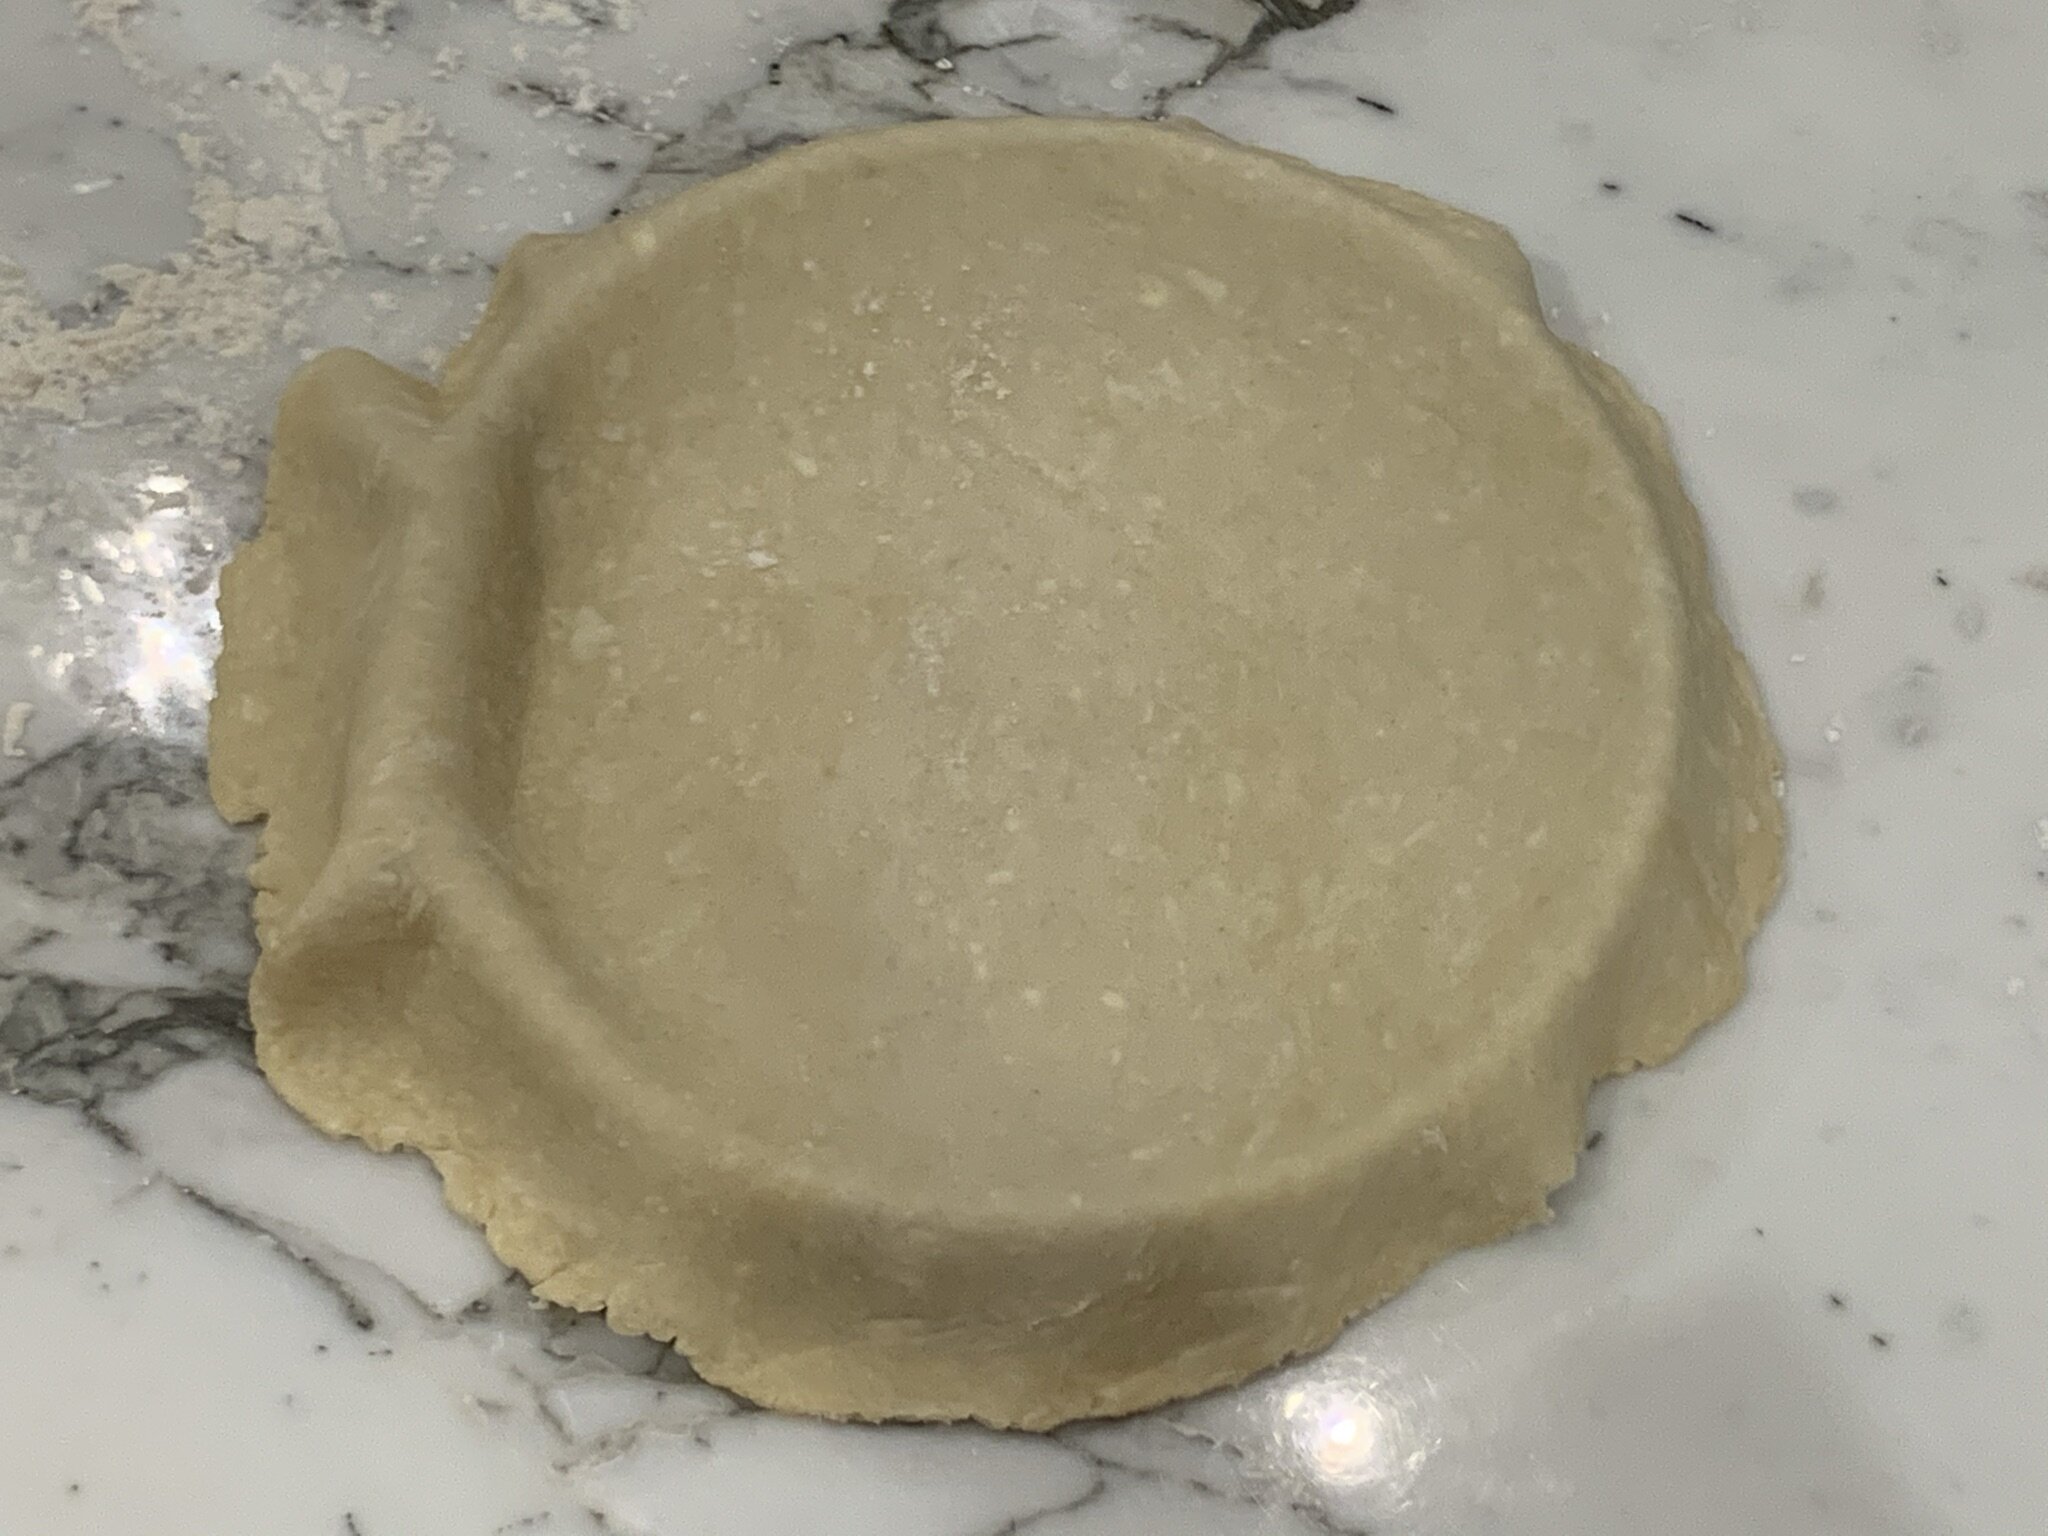 Transfer dough to tart pan.